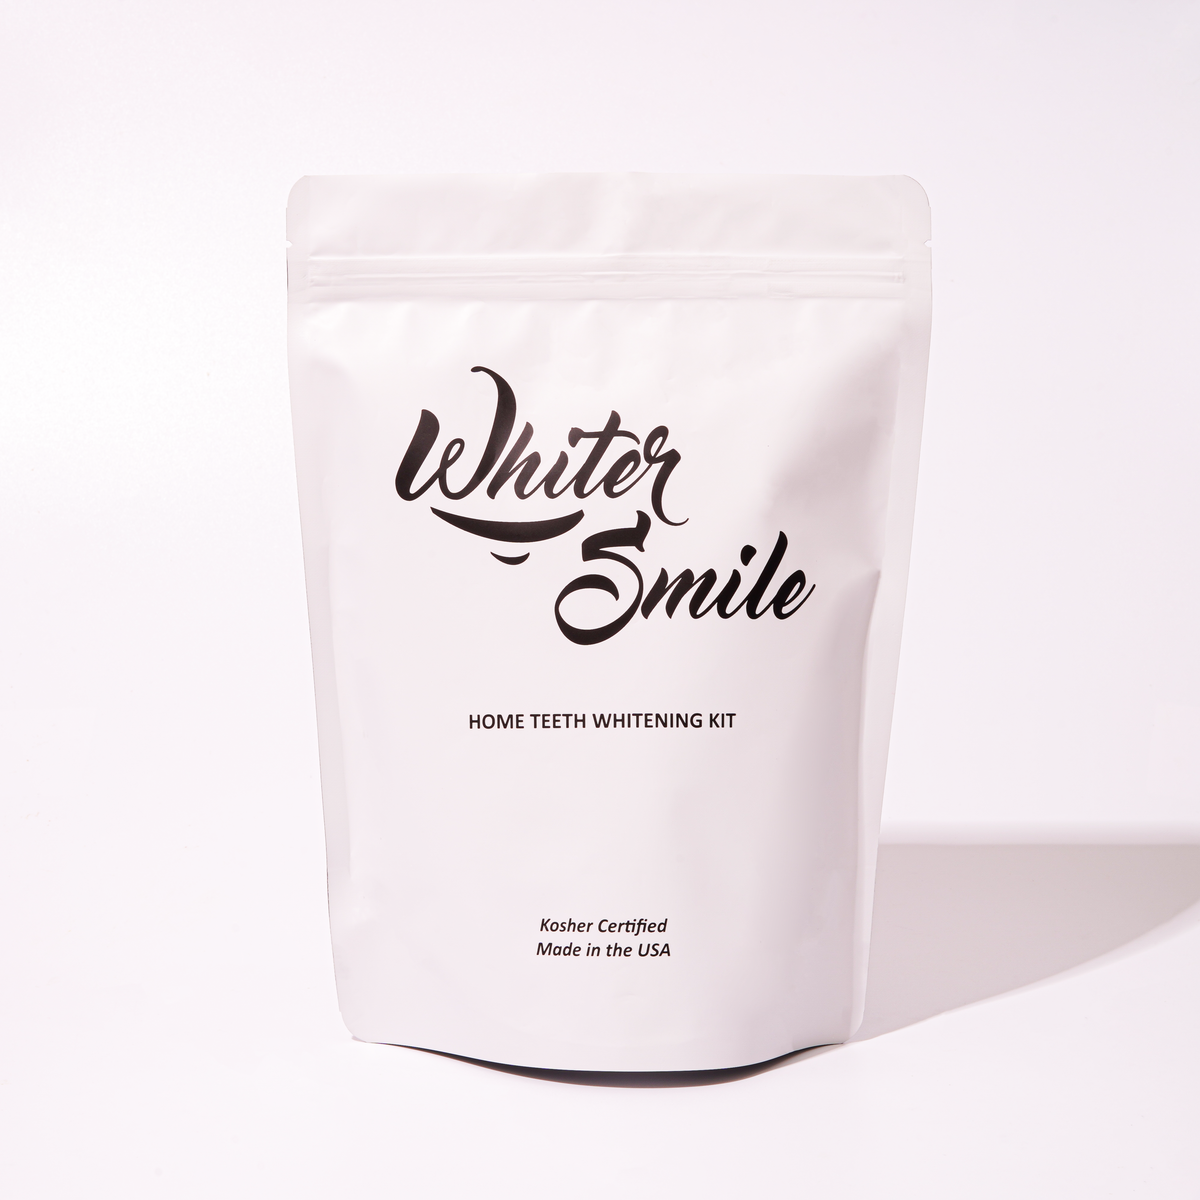 Whiter Smile Home Teeth Whitening Kit